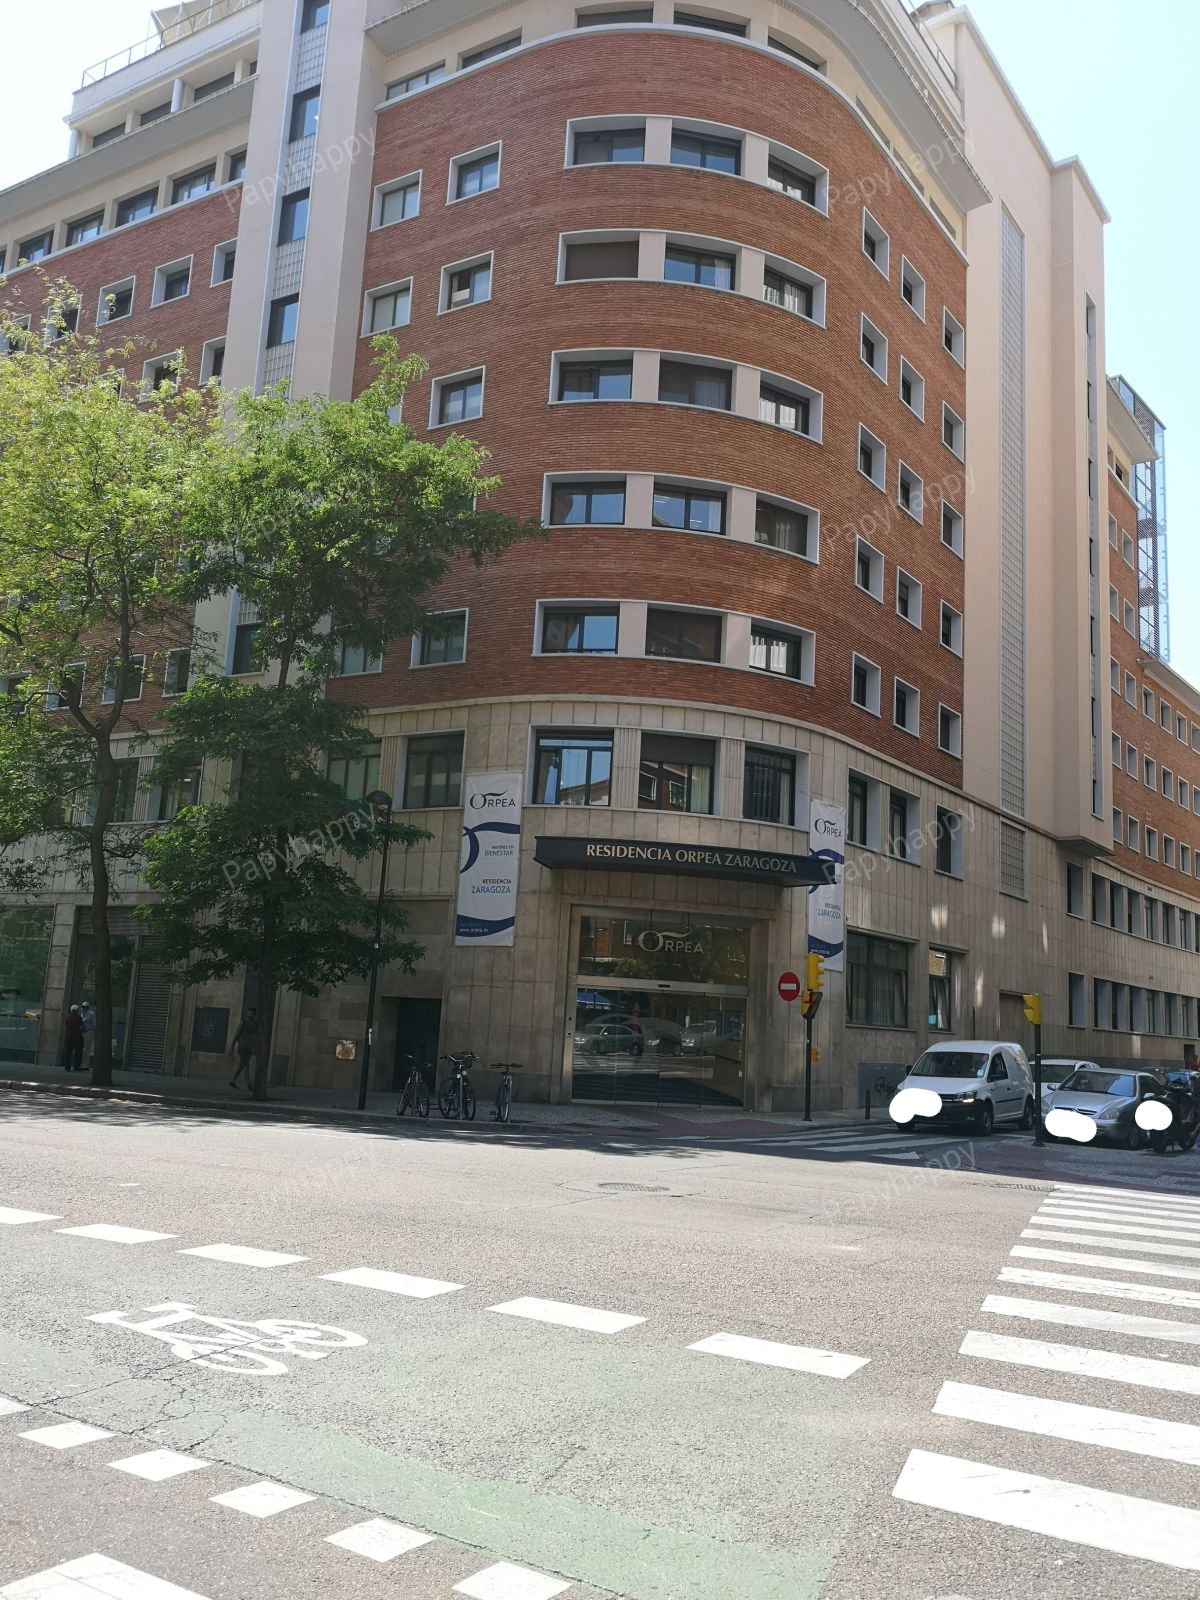 Residencia de mayores Zaragoza (1/4)